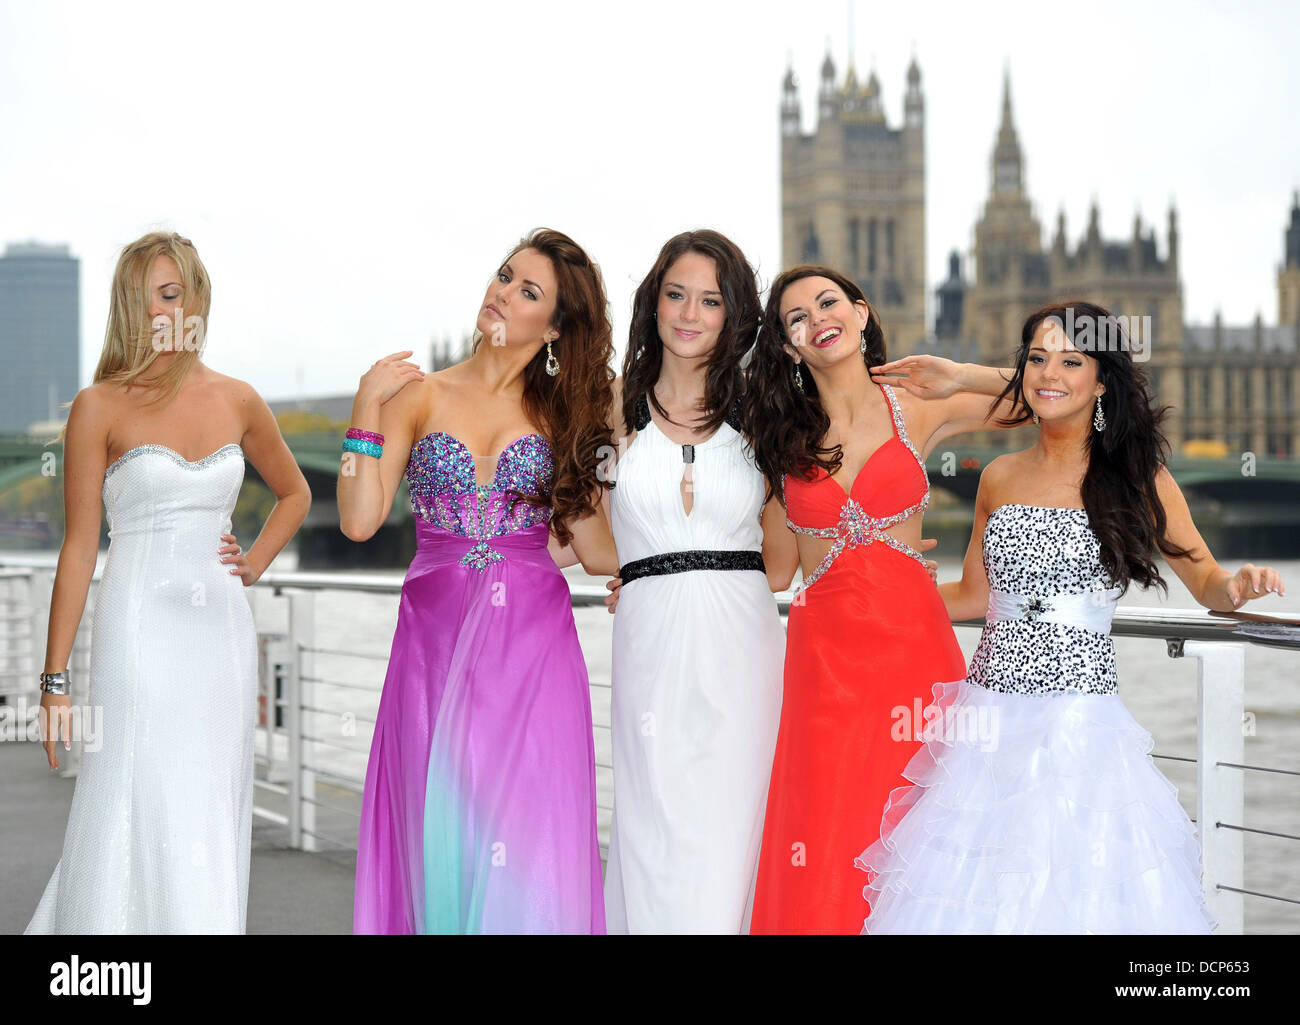 Miss Inghilterra, Miss Scozia, Miss Galles, Miss Irlanda del Nord e Miss Irlanda Miss Mondo - photocall tenutosi presso la London Eye Pier. Londra, Inghilterra - 31.10.11 Foto Stock